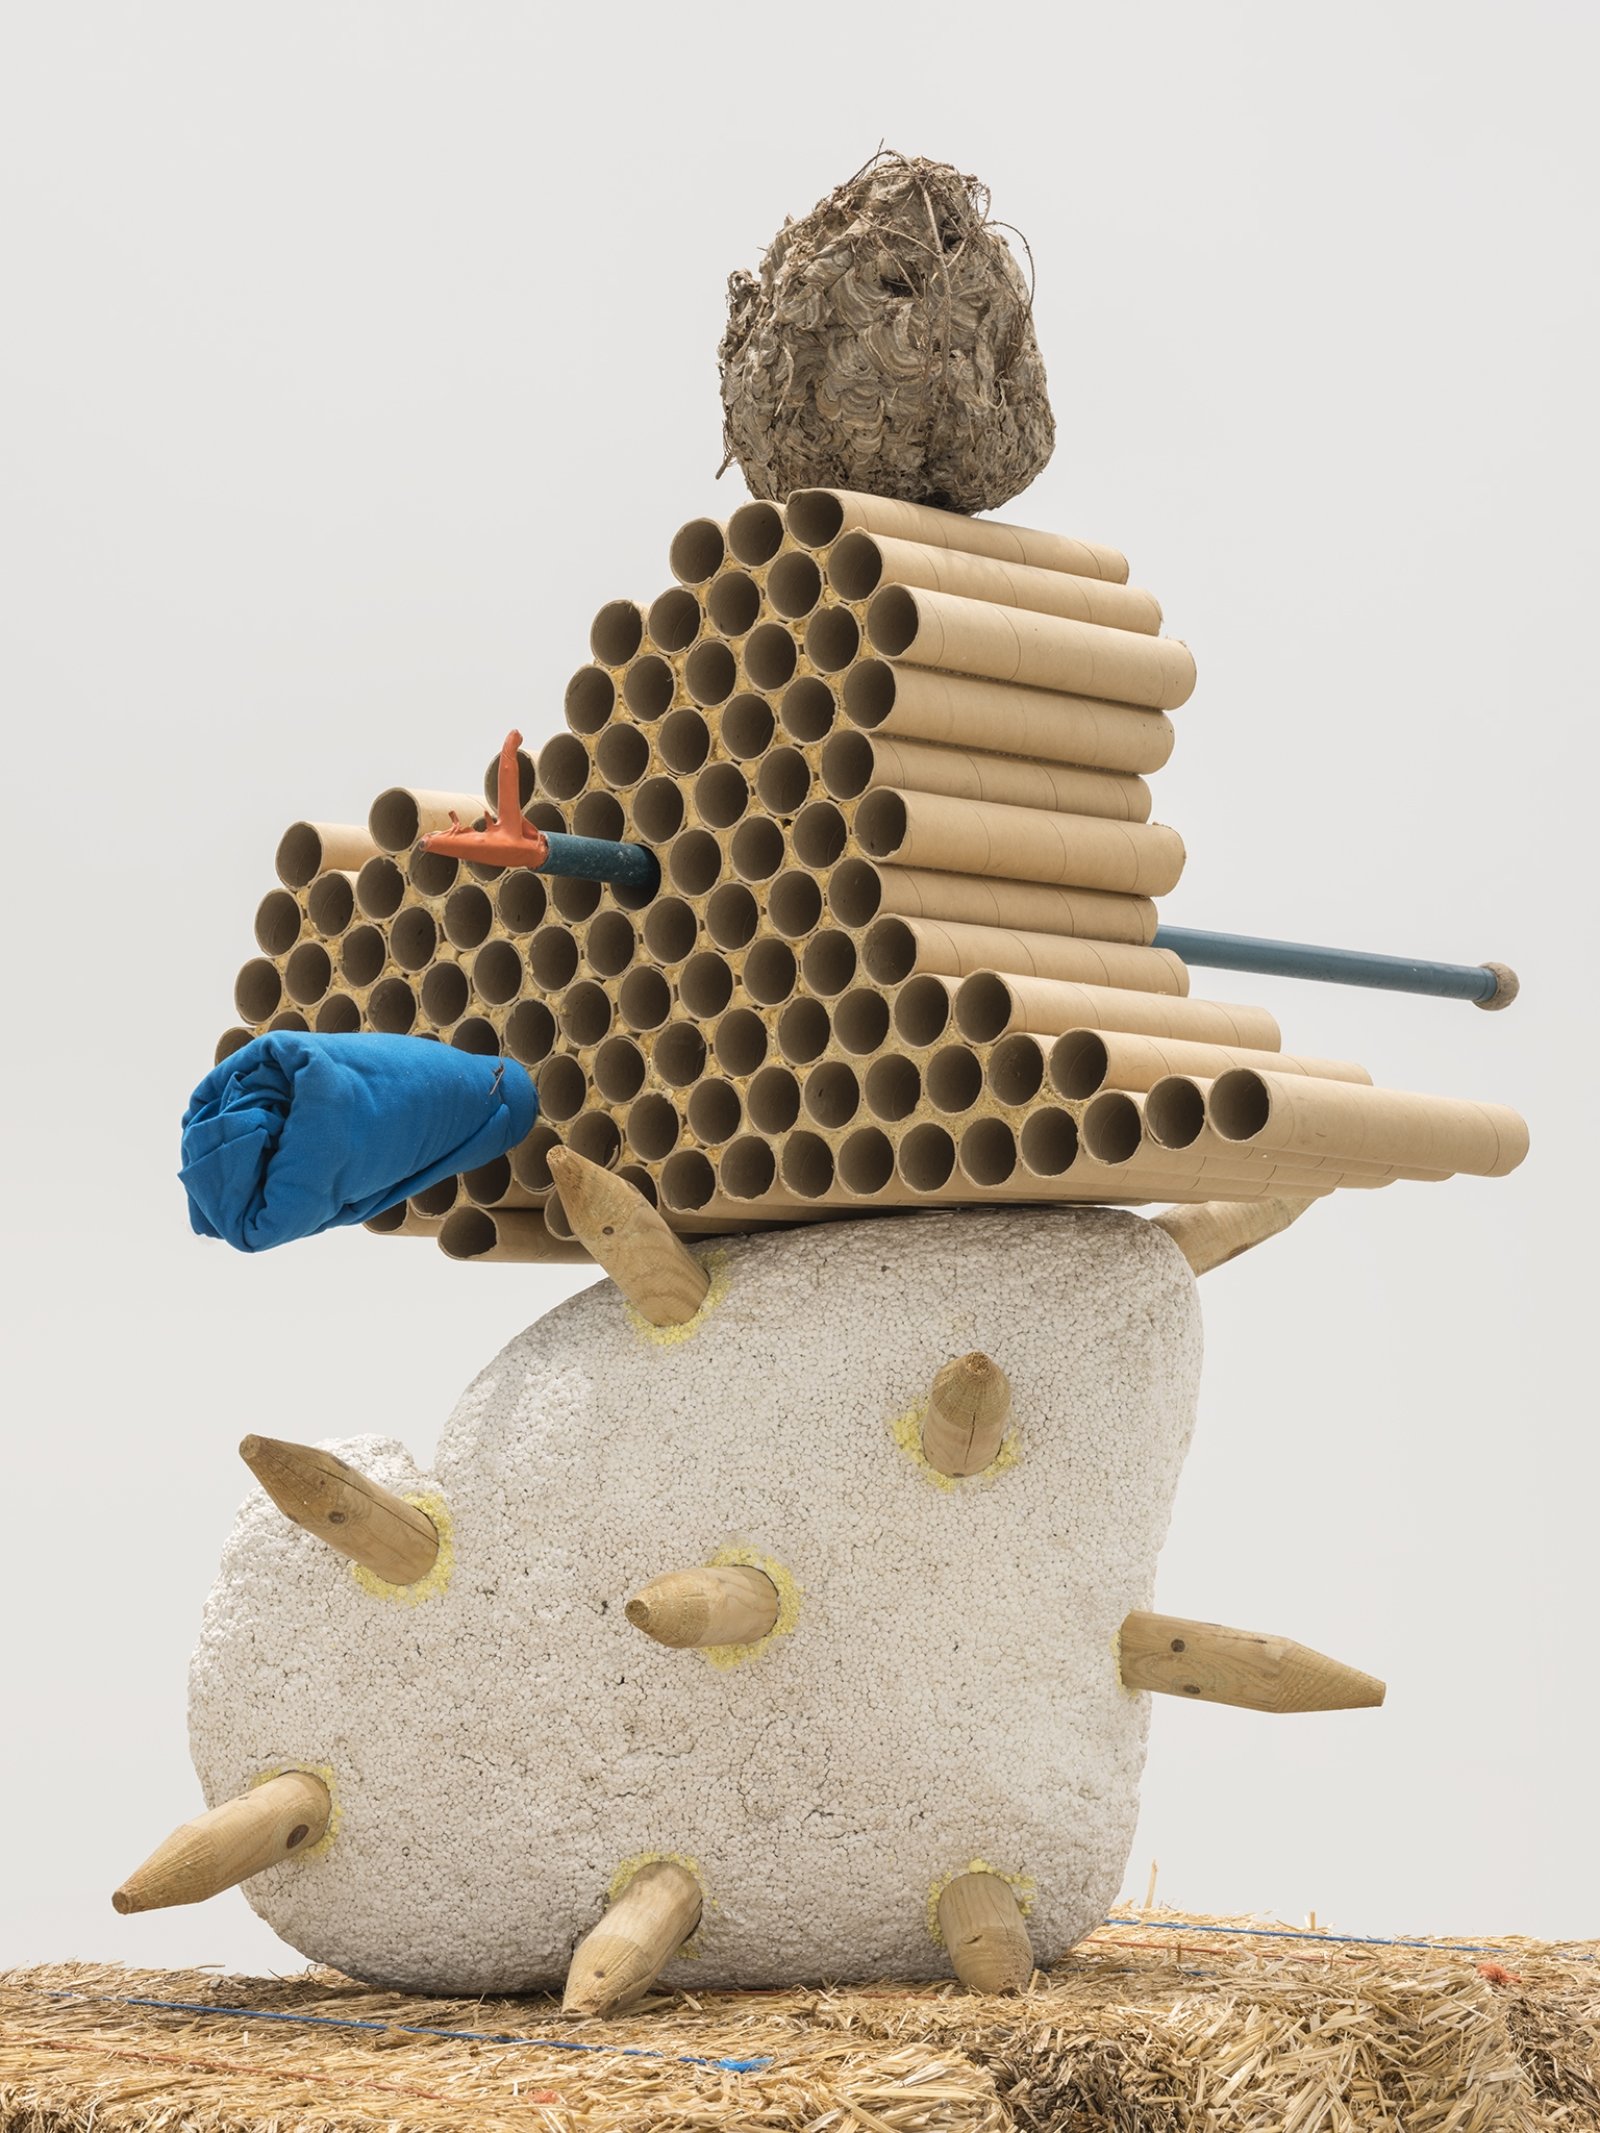 Jerry Pethick, Gobi Clone (detail), 1996/1997, straw bales, styrofoam, wood, cardboard, hornet’s nest, anodized aluminum, polypropylene rope, cloth, orange rubber, iron wire, sulphur, dried fir needles, 107 x 55 x 46 in. (272 x 140 x 117 cm)